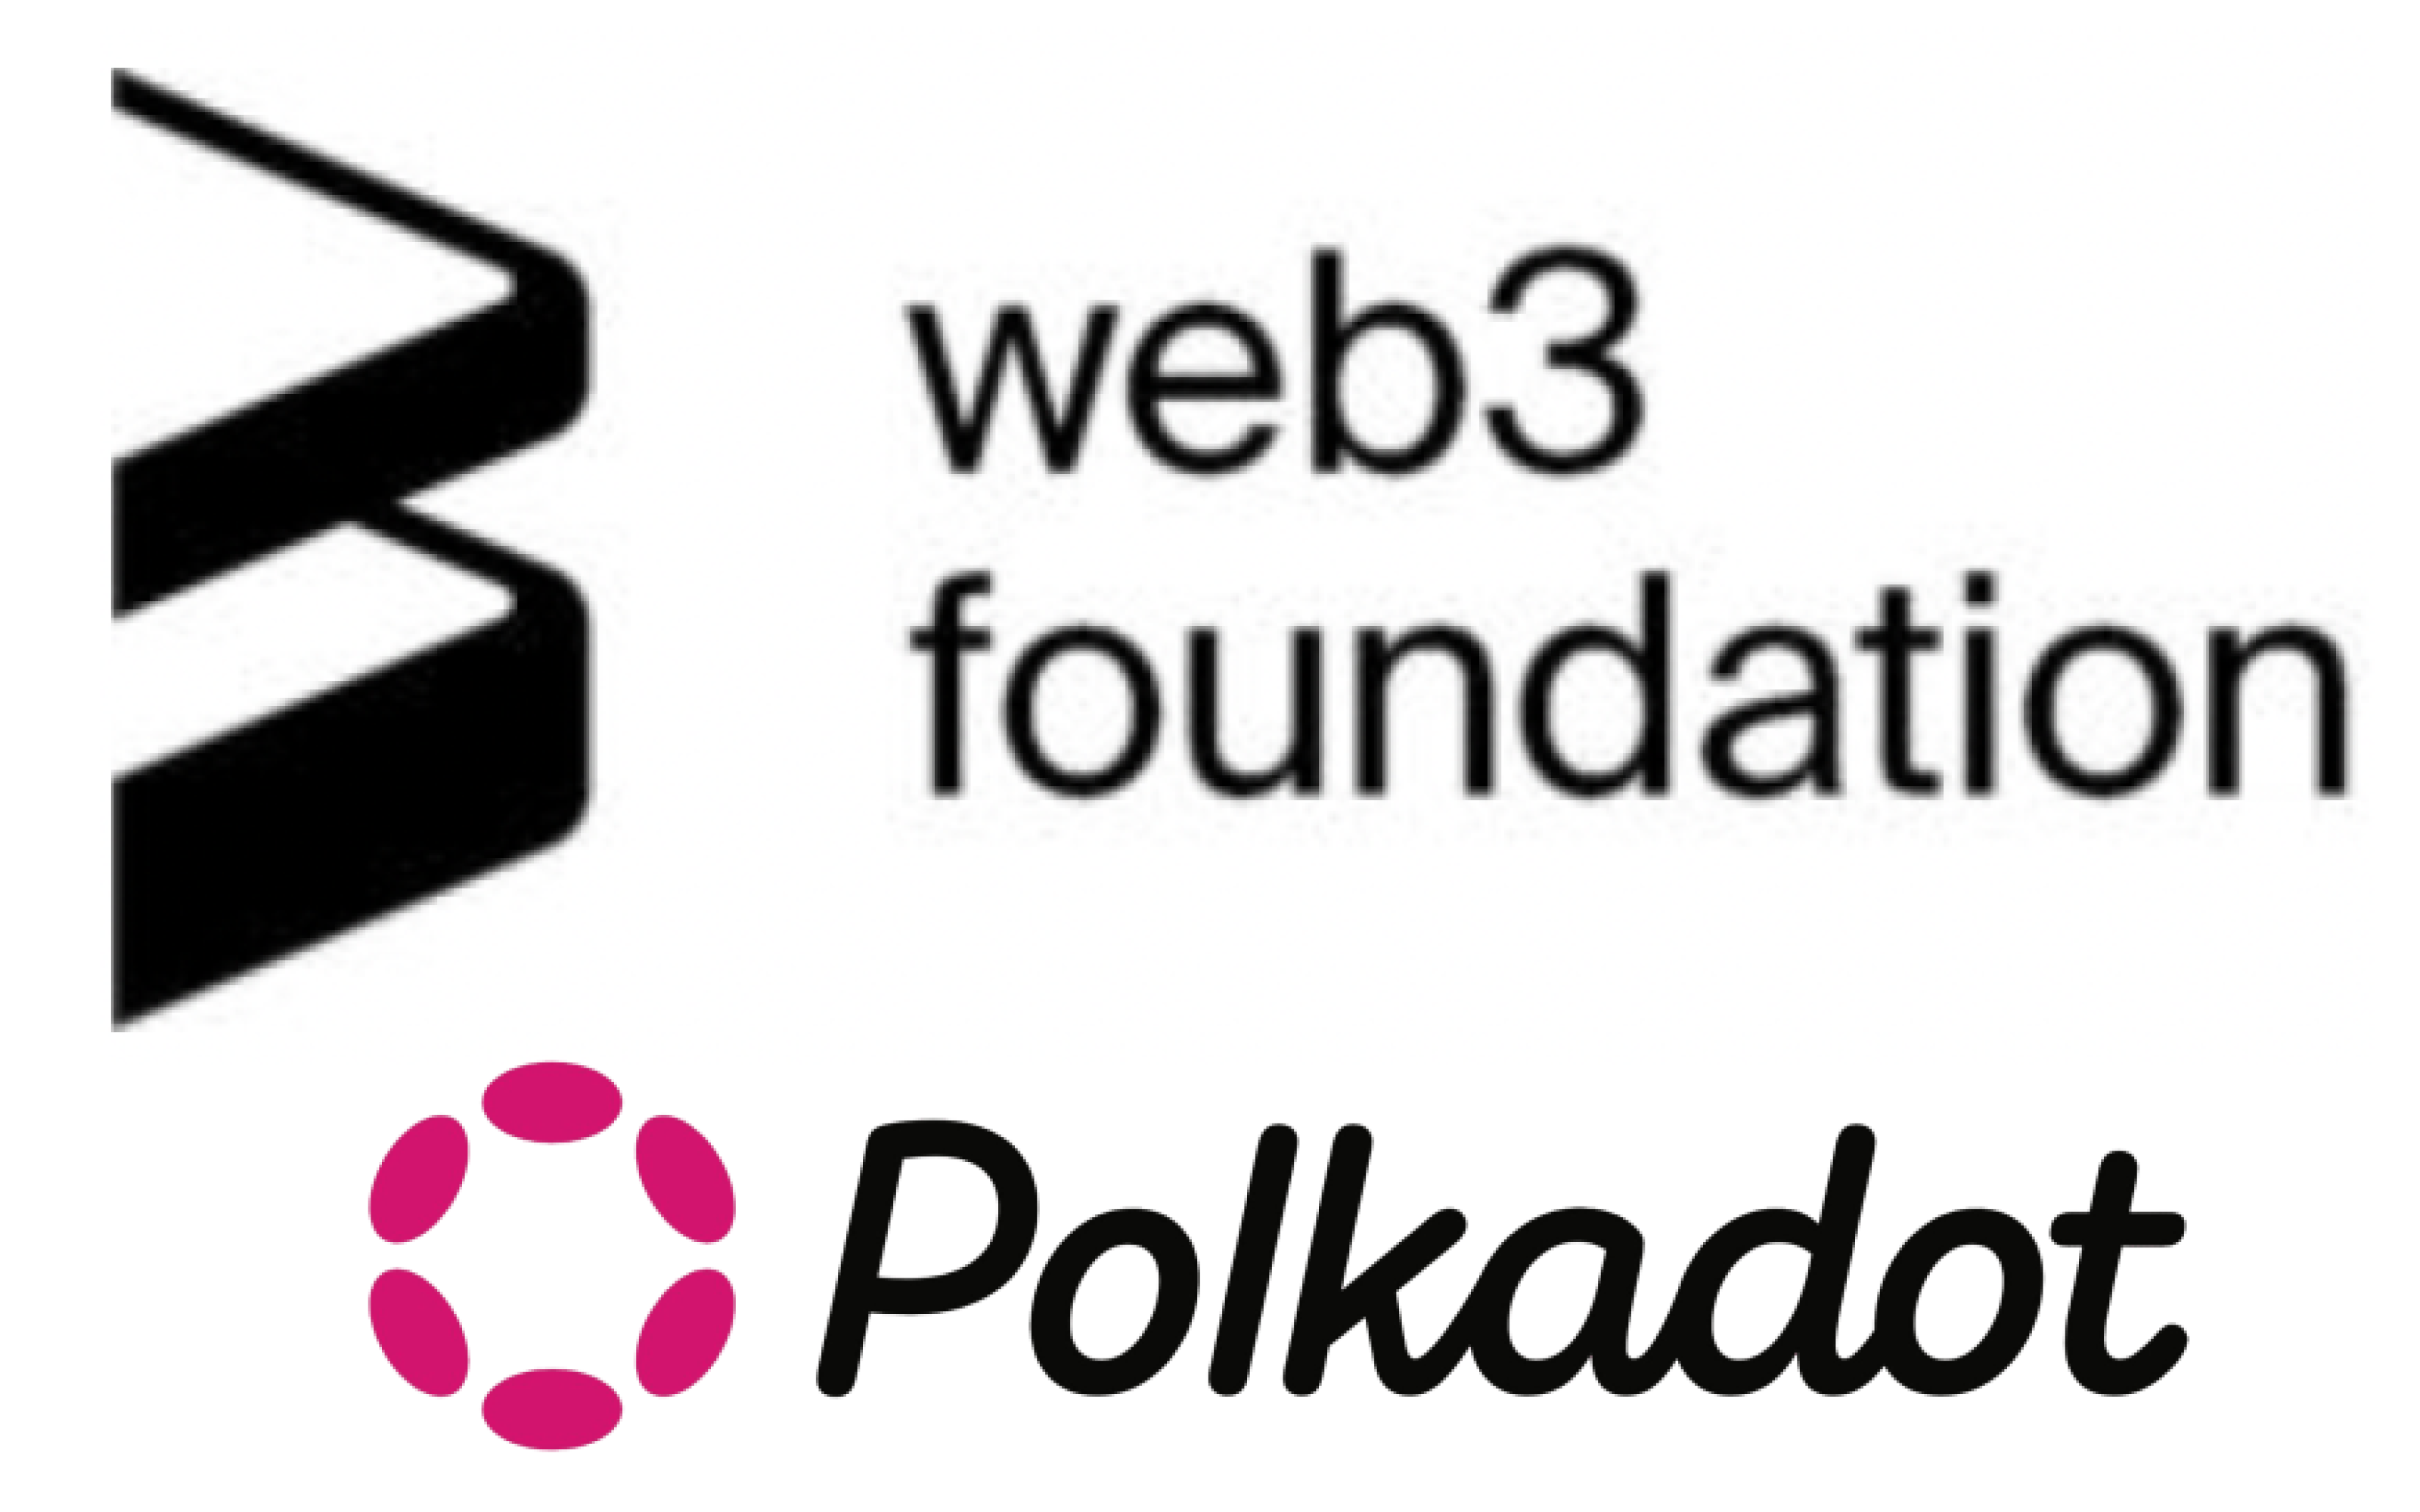 Polkadot Web3 Foundation